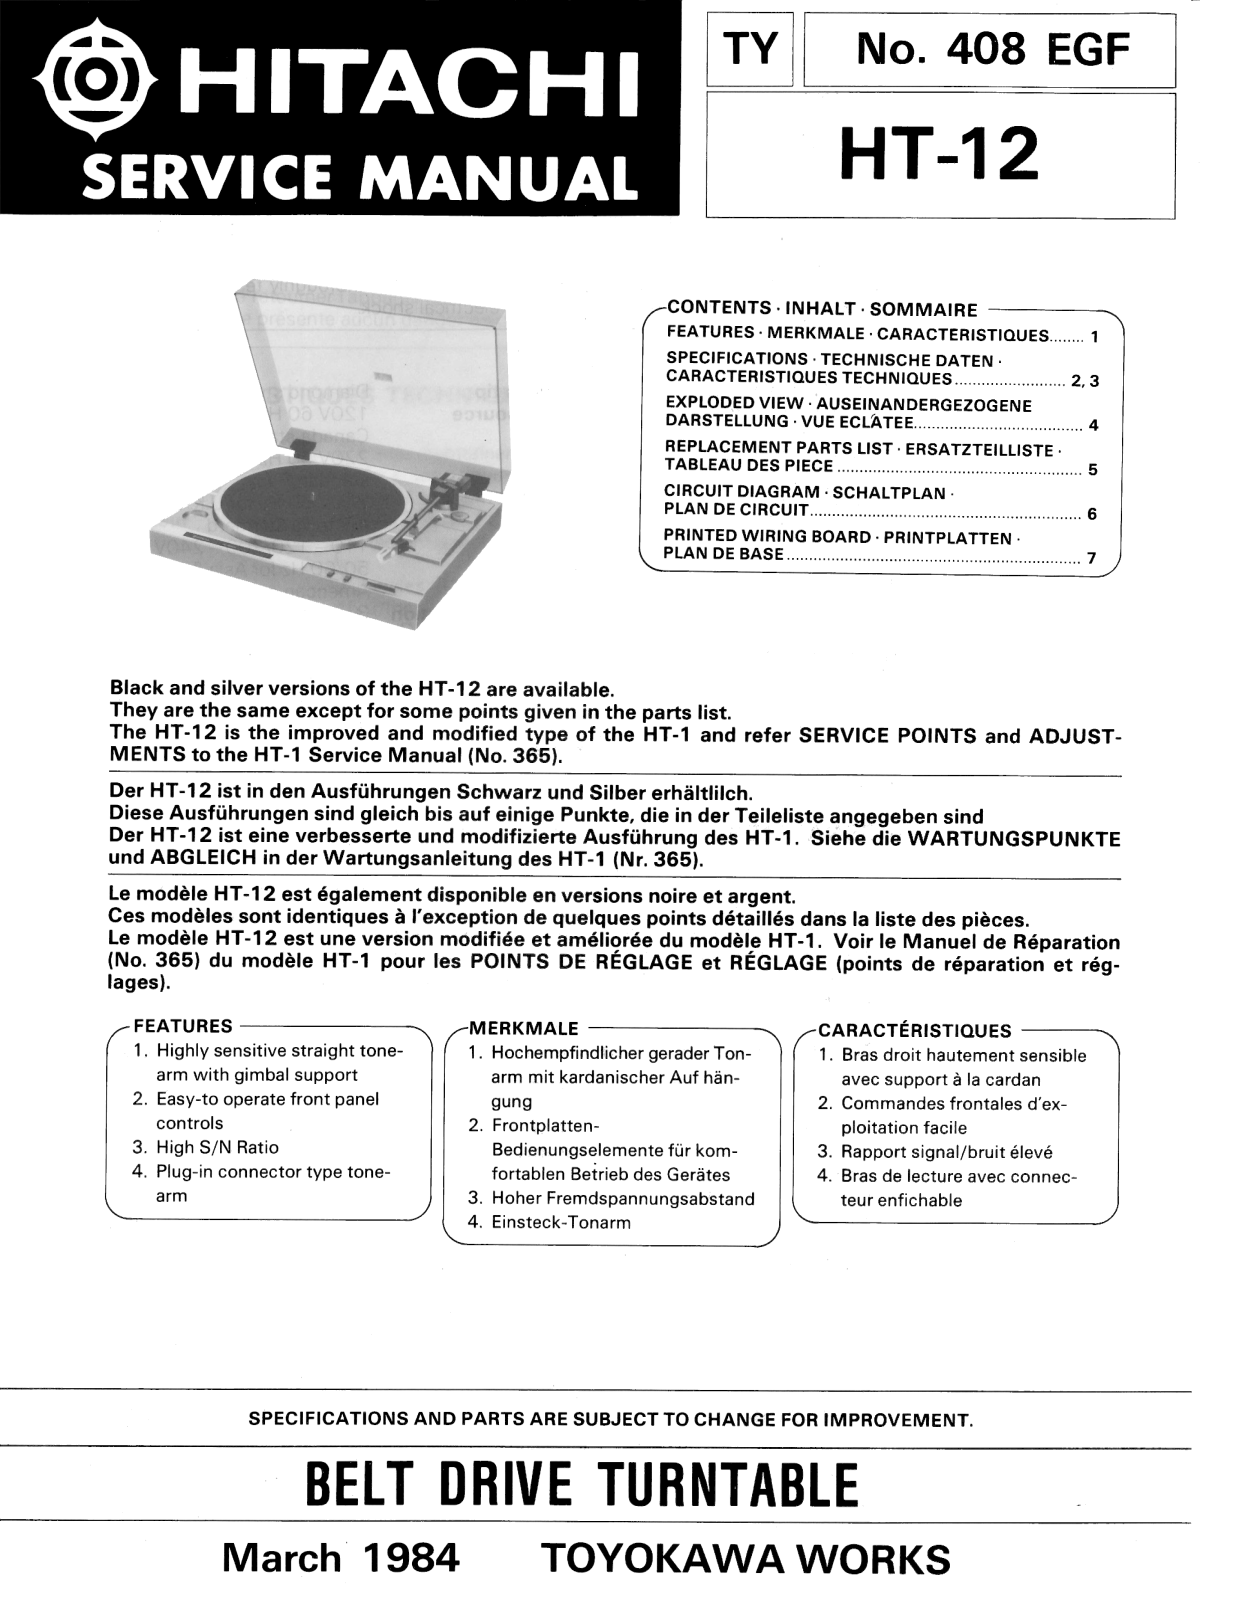 Hitachi HT-12 Service Manual